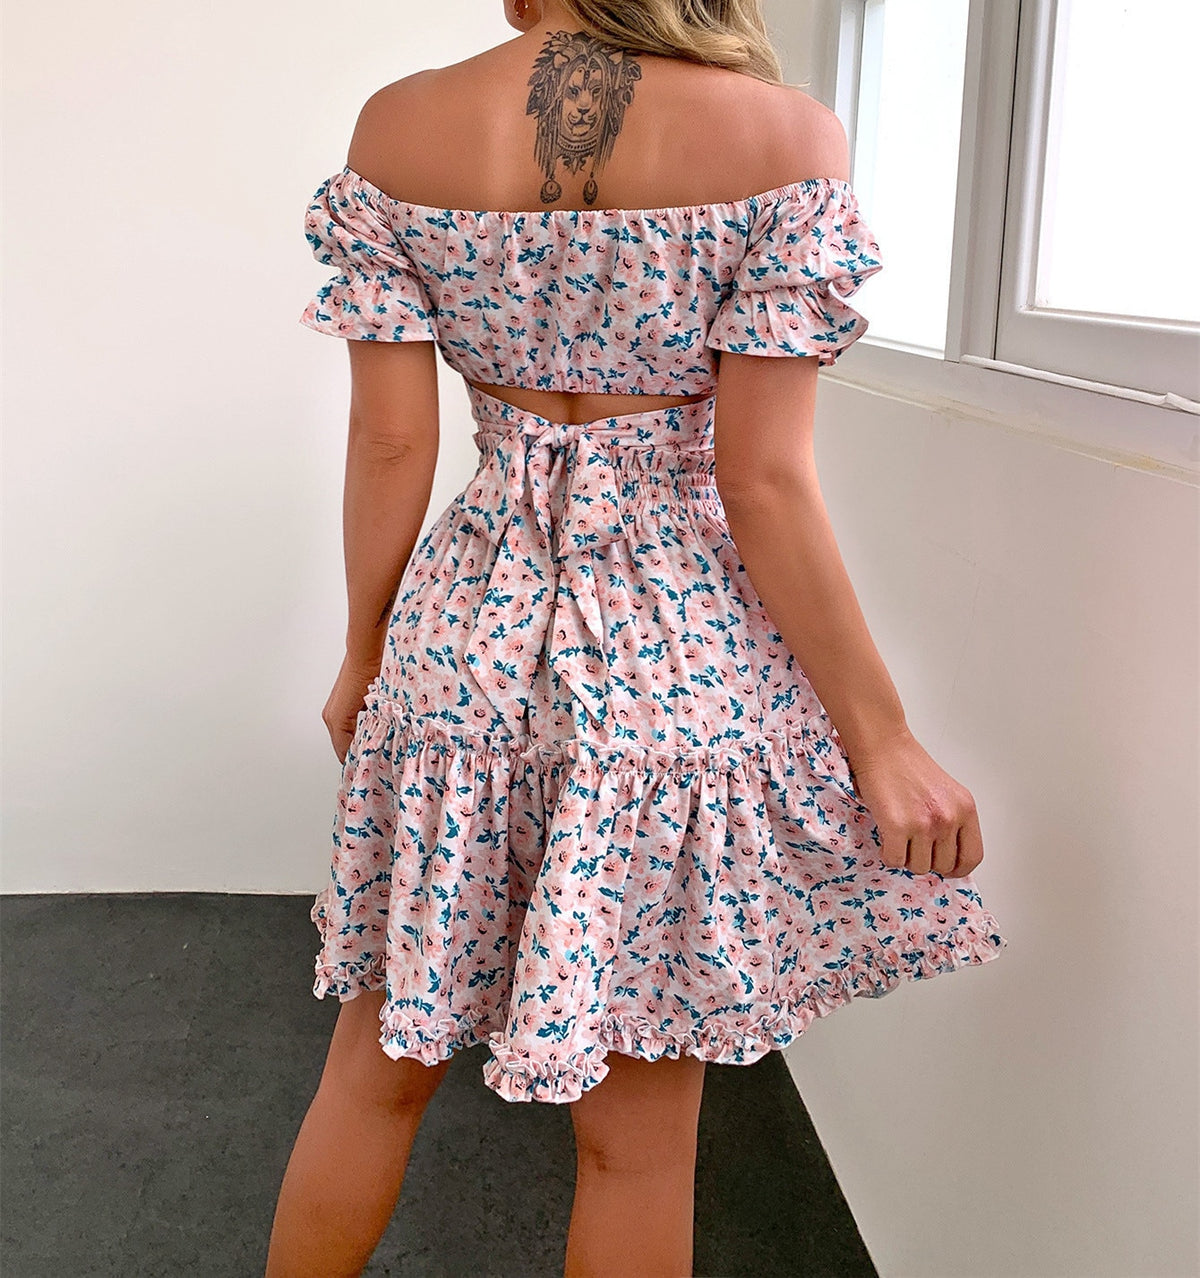 Women Summer Bohemian Floral Skirts Set Off Shoulder Short Sleeve Crop Tops + A-line Skirt 2Pcs Sets Female Two Piece Set